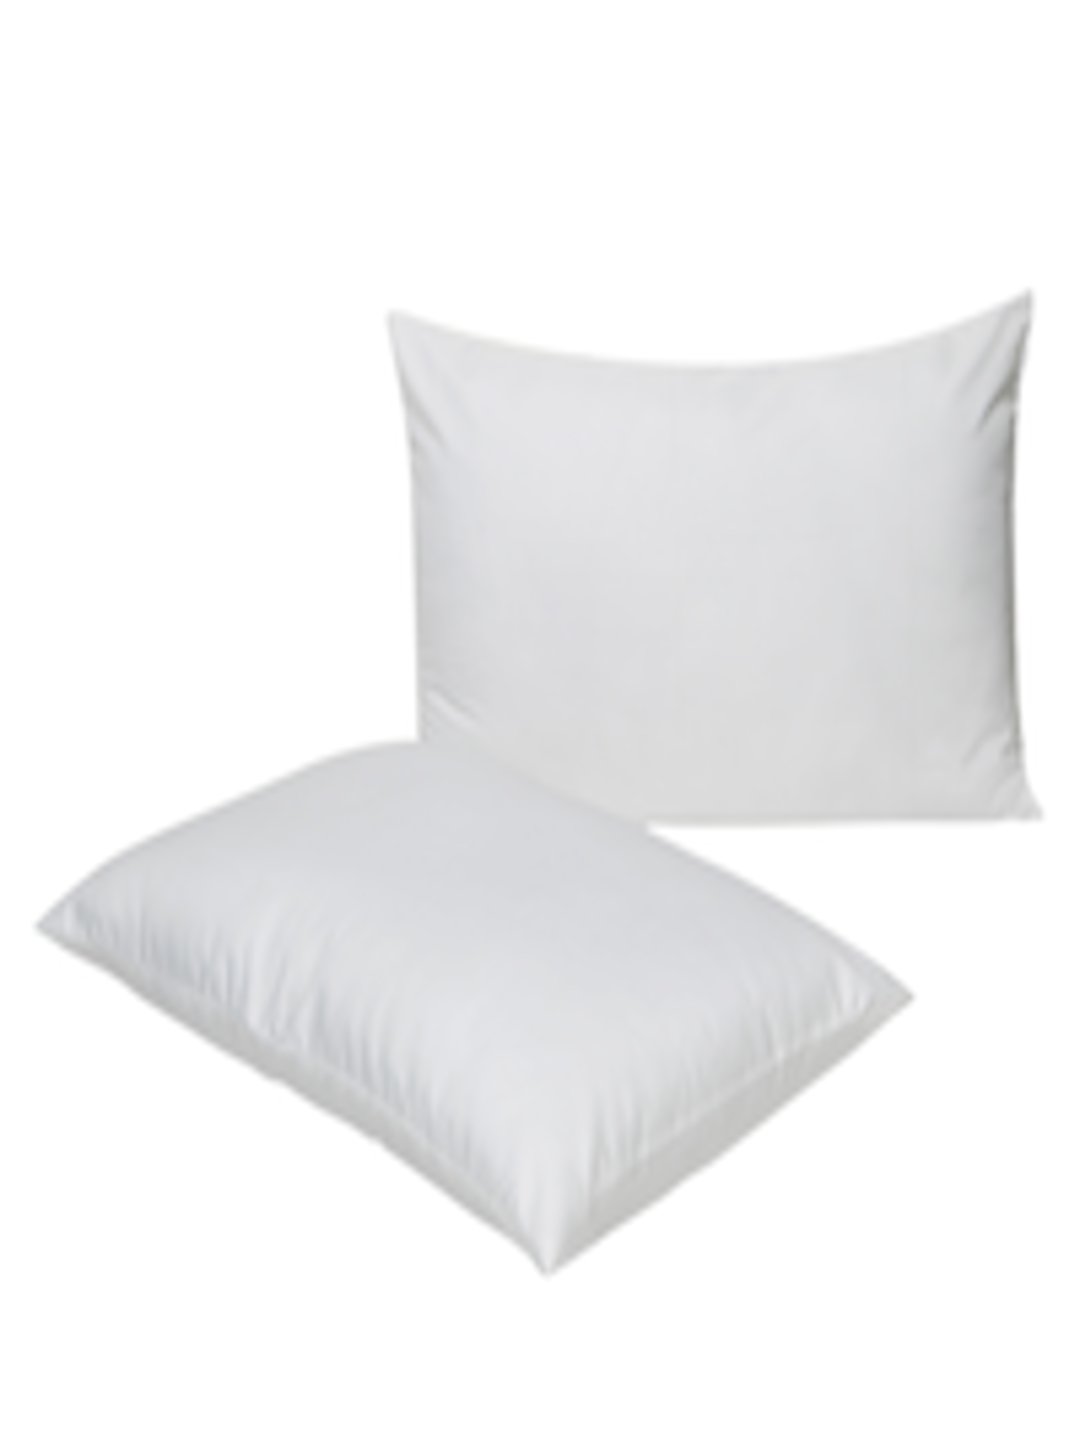 Buy Welspun White Polyester Set Of 2 Pillows